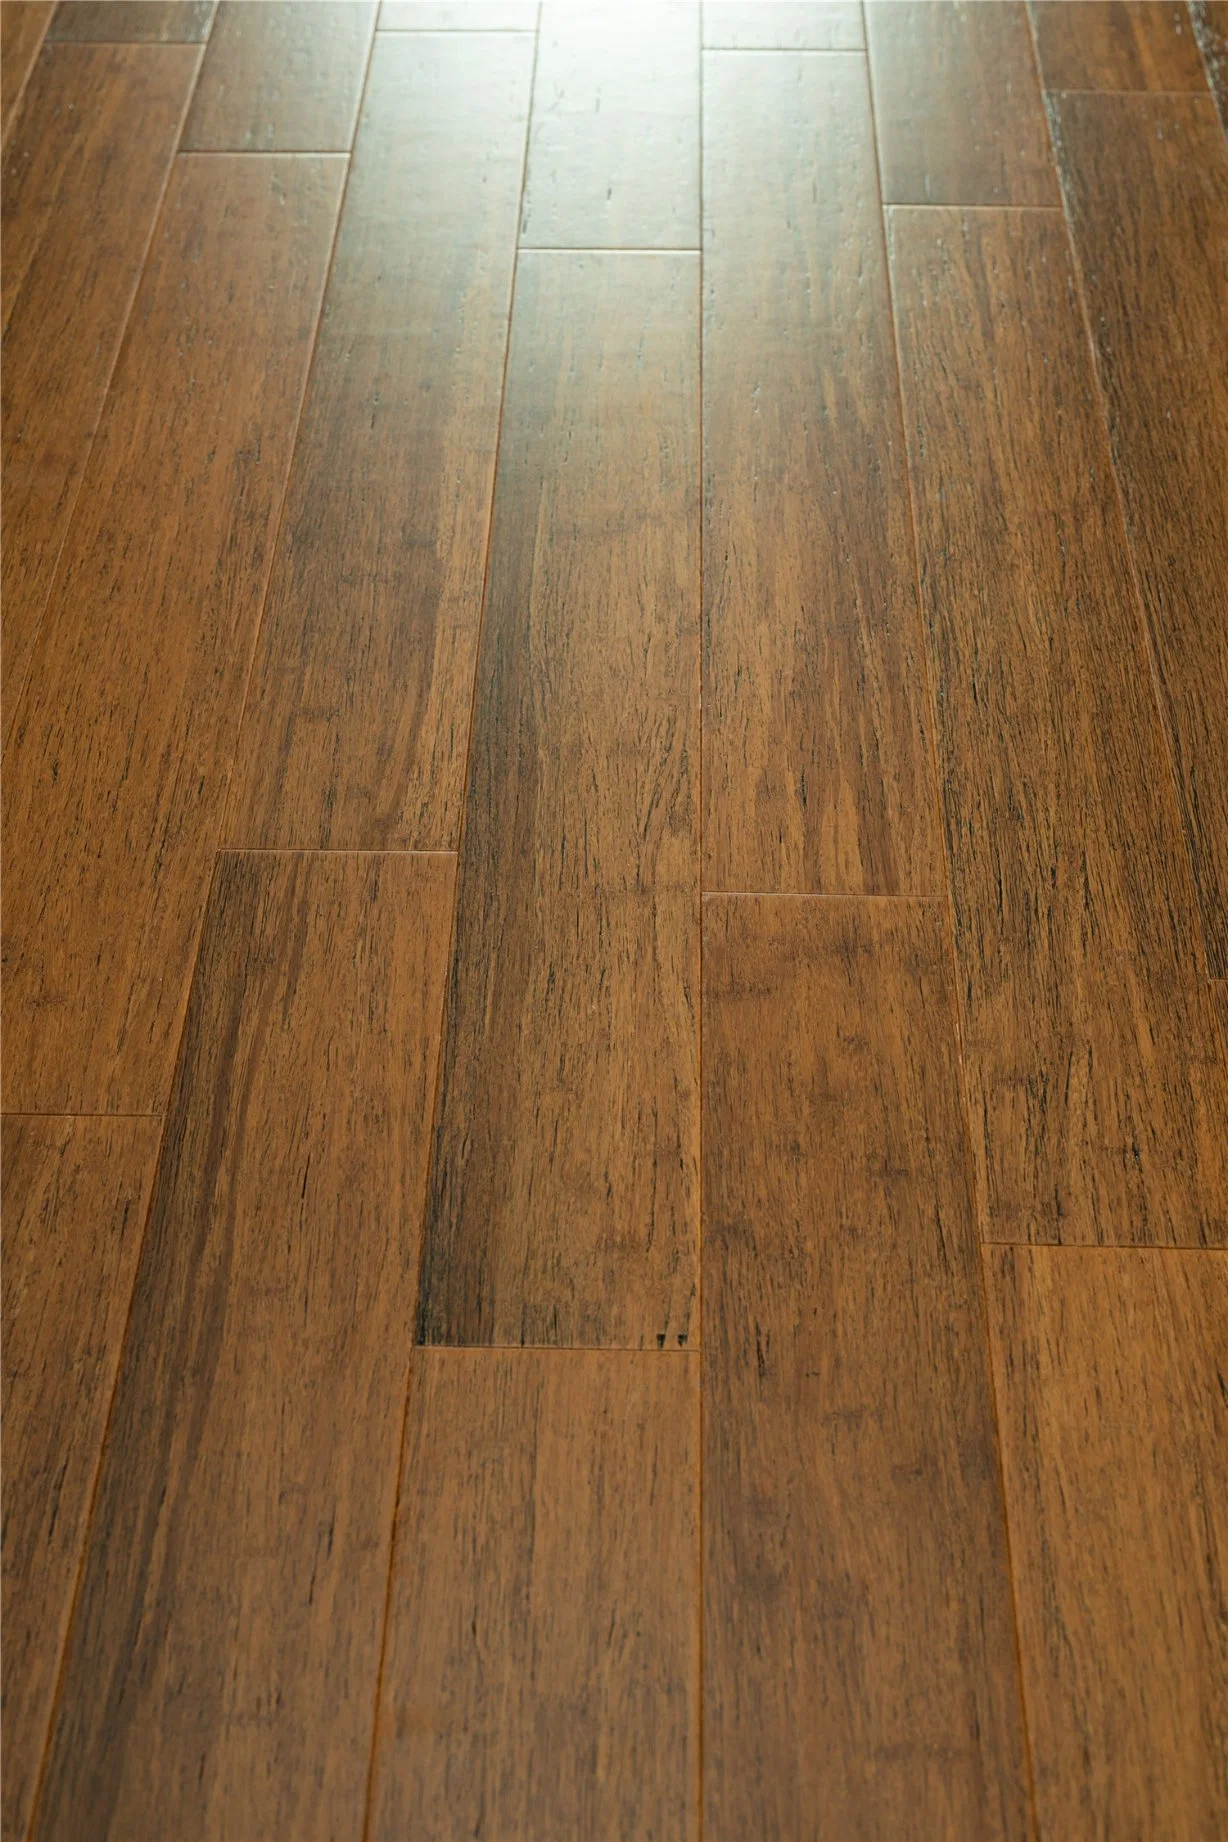 Wide Bamboo Plank Strand Woven Bamboo Flooring Underfloor Heating Floor Tiles 14/15mm Floor Made in China